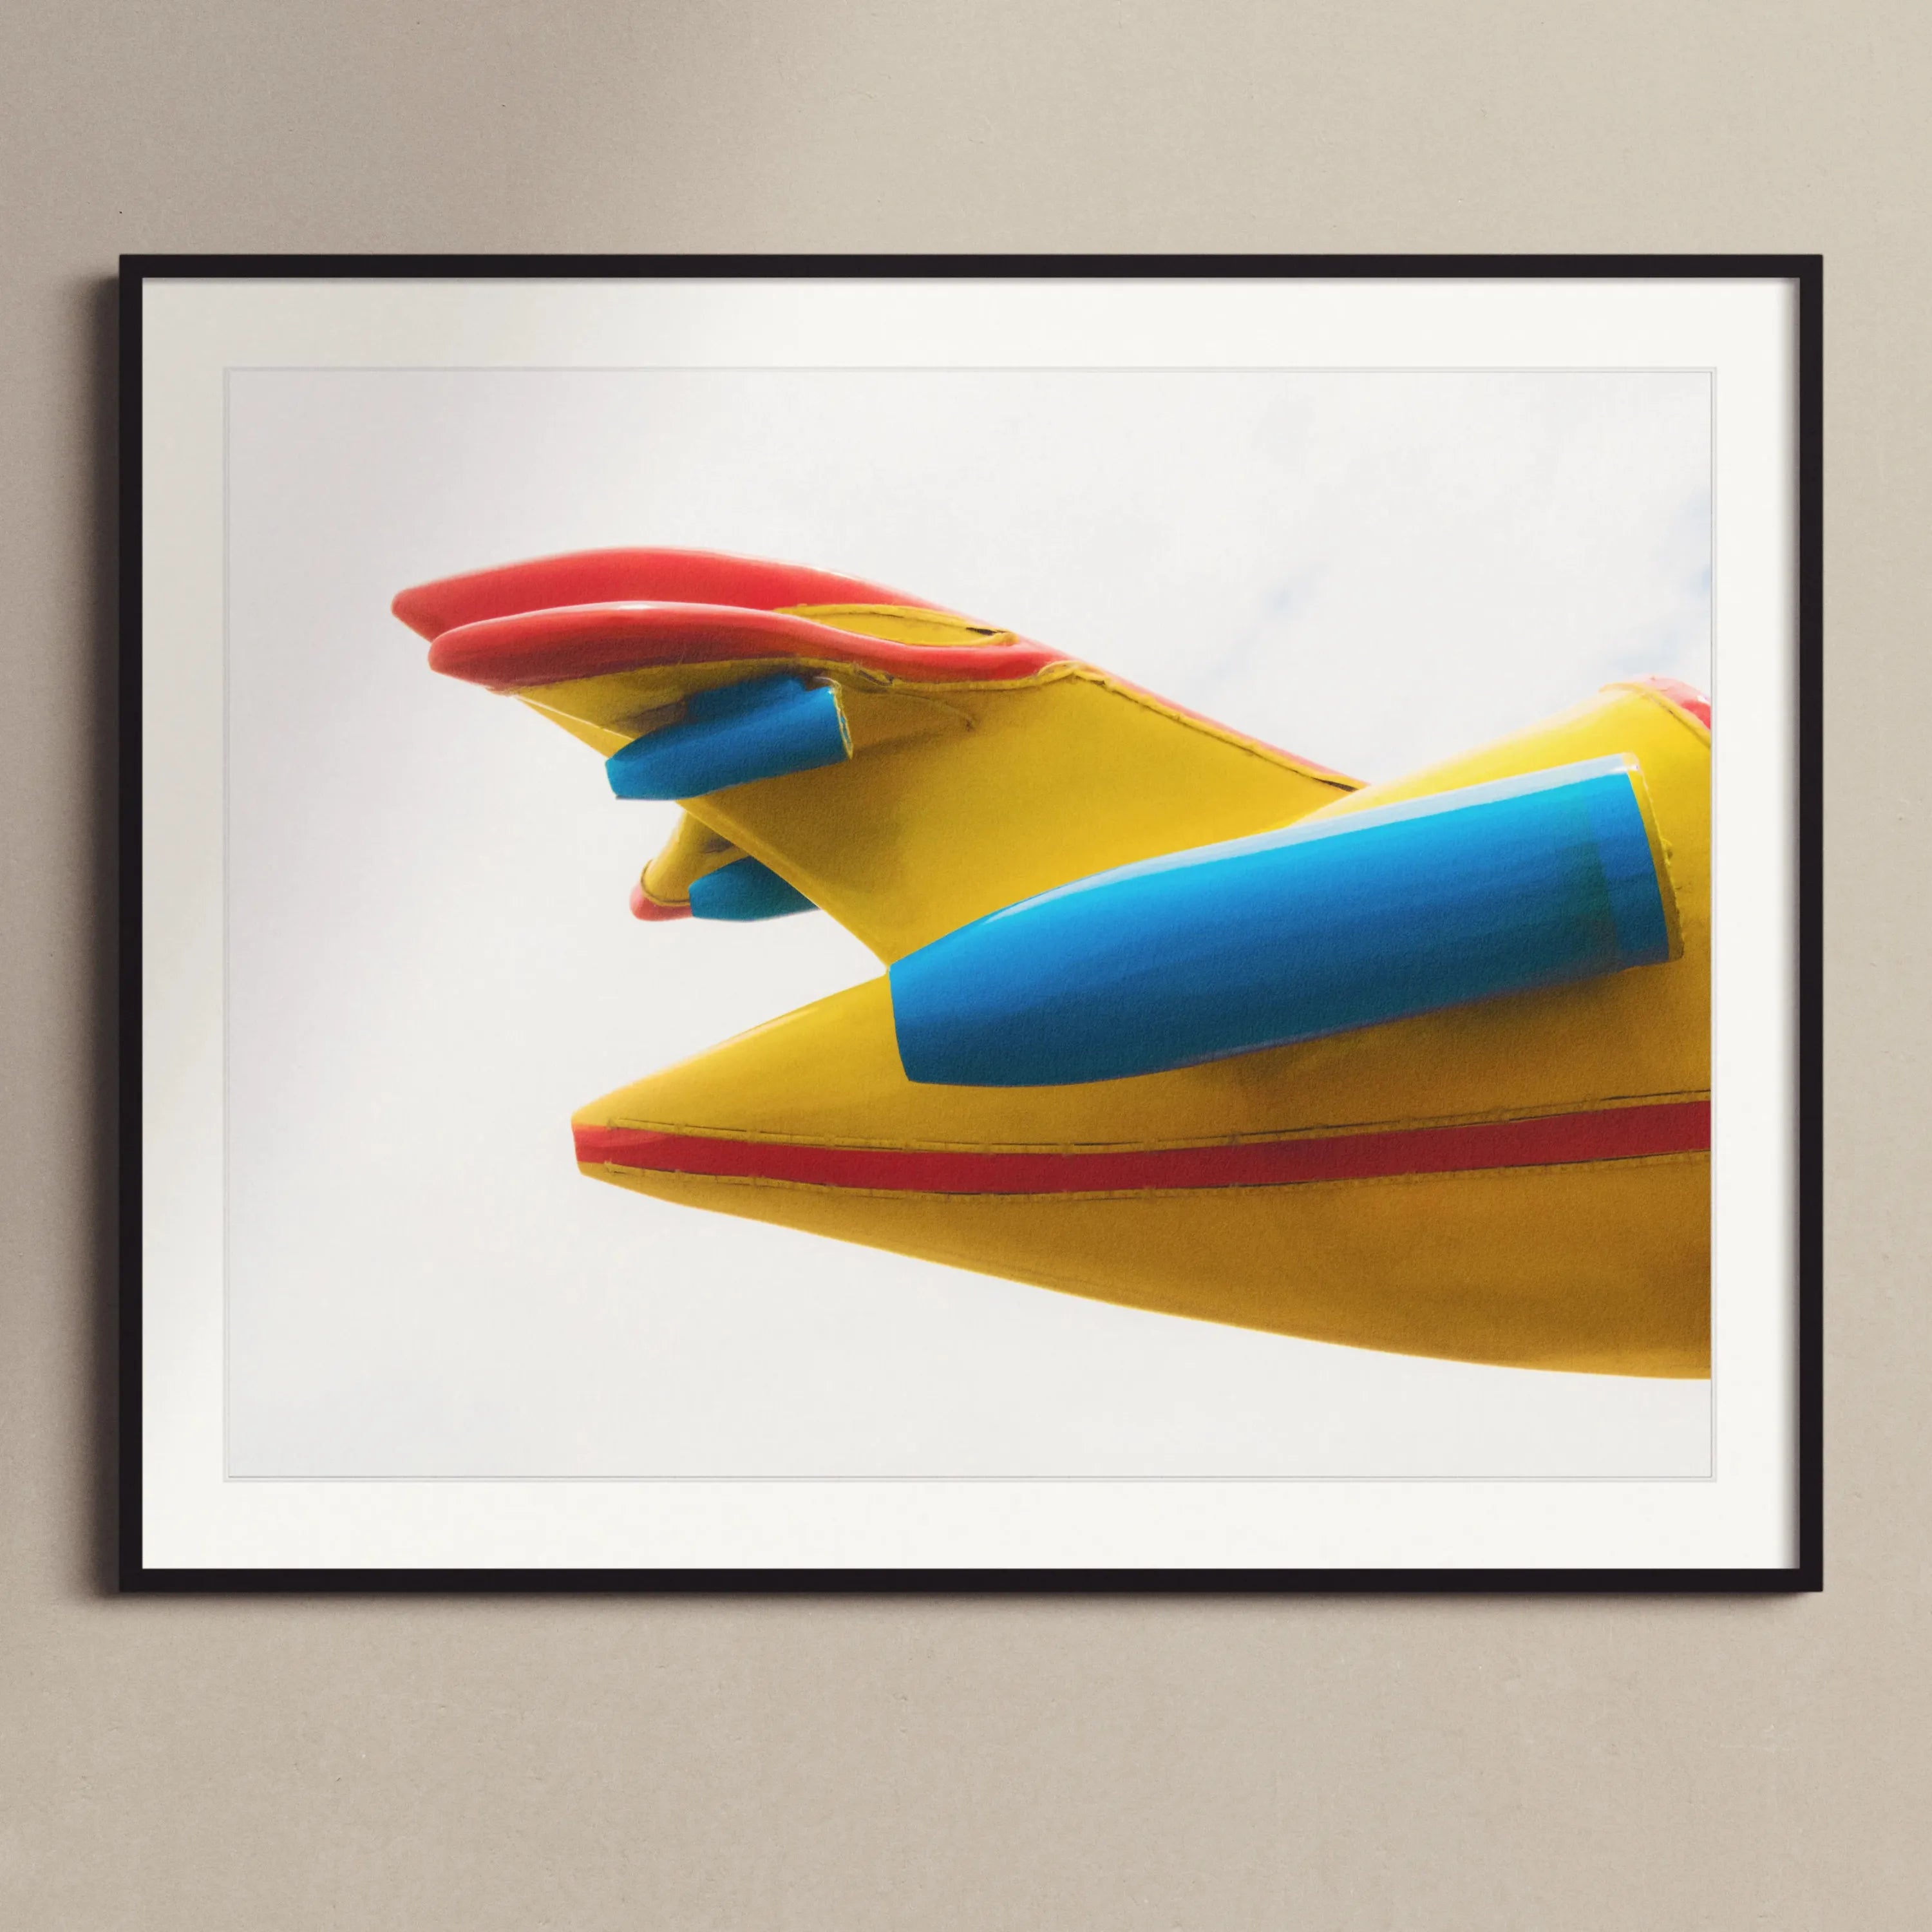 Flying High 7 Framed & Mounted Print - Posters Prints & Visual Artwork - Aesthetic Art